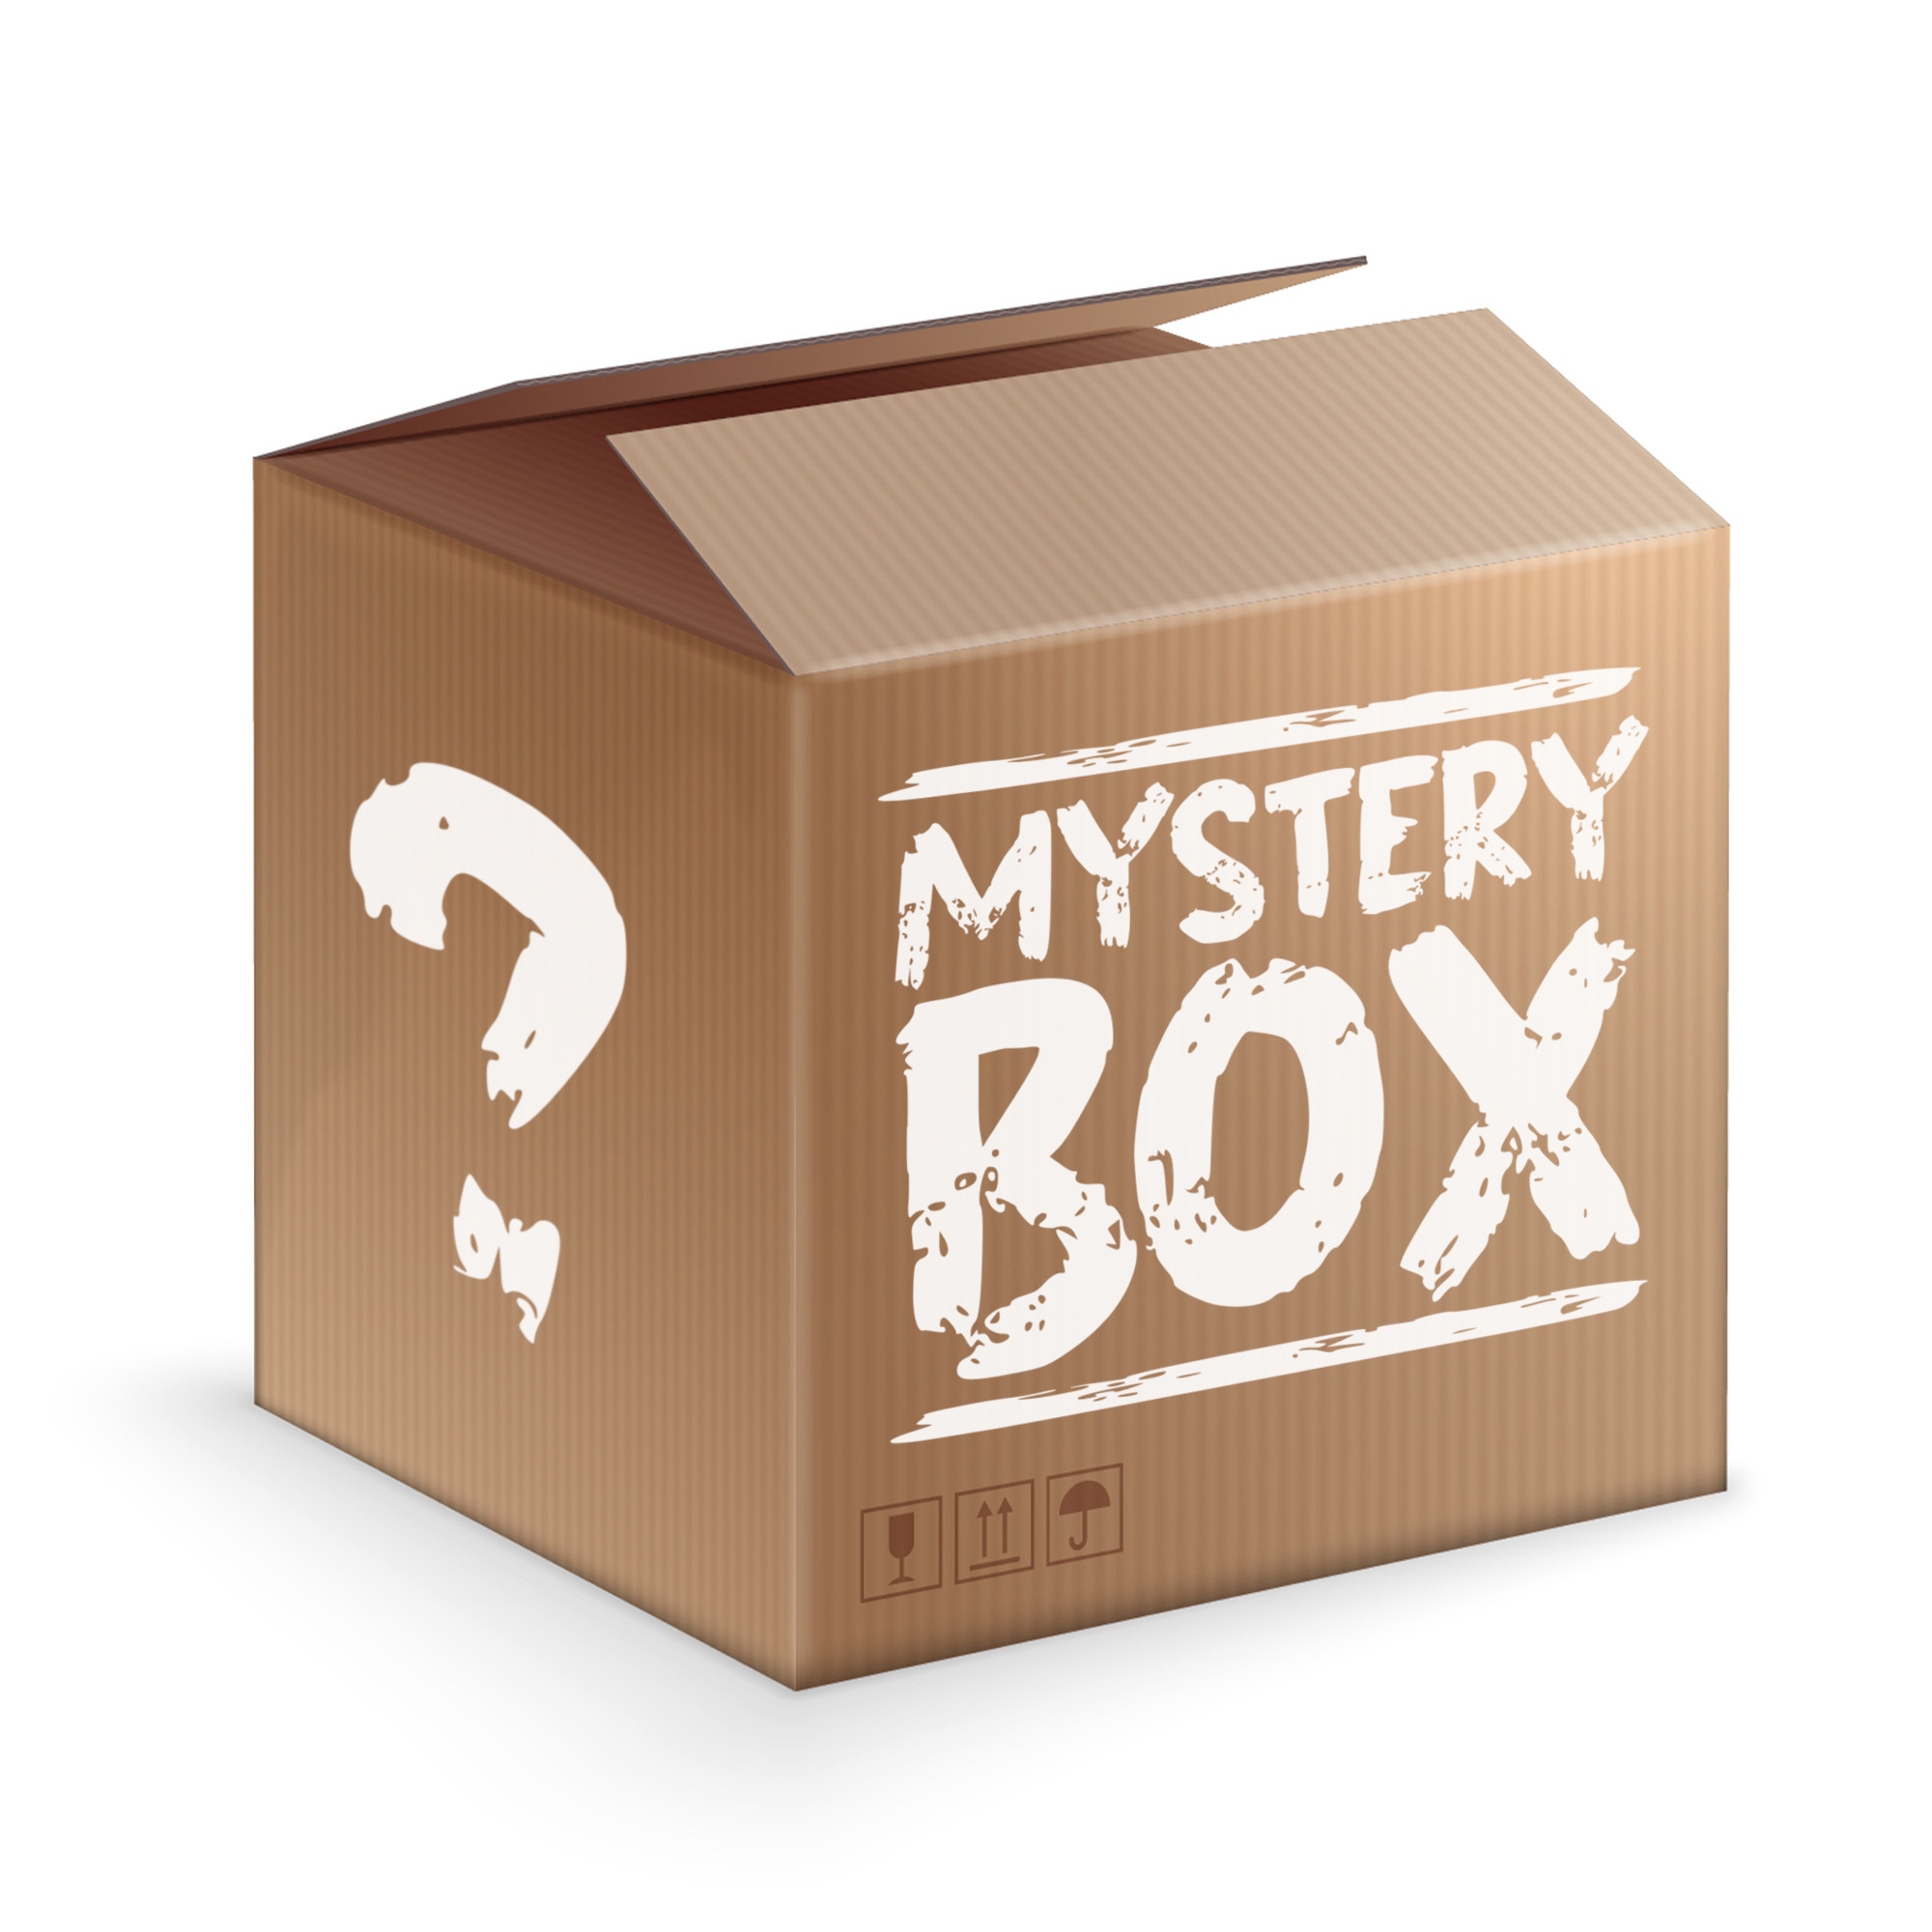 Mystery Box EasyRiser - Easyriser